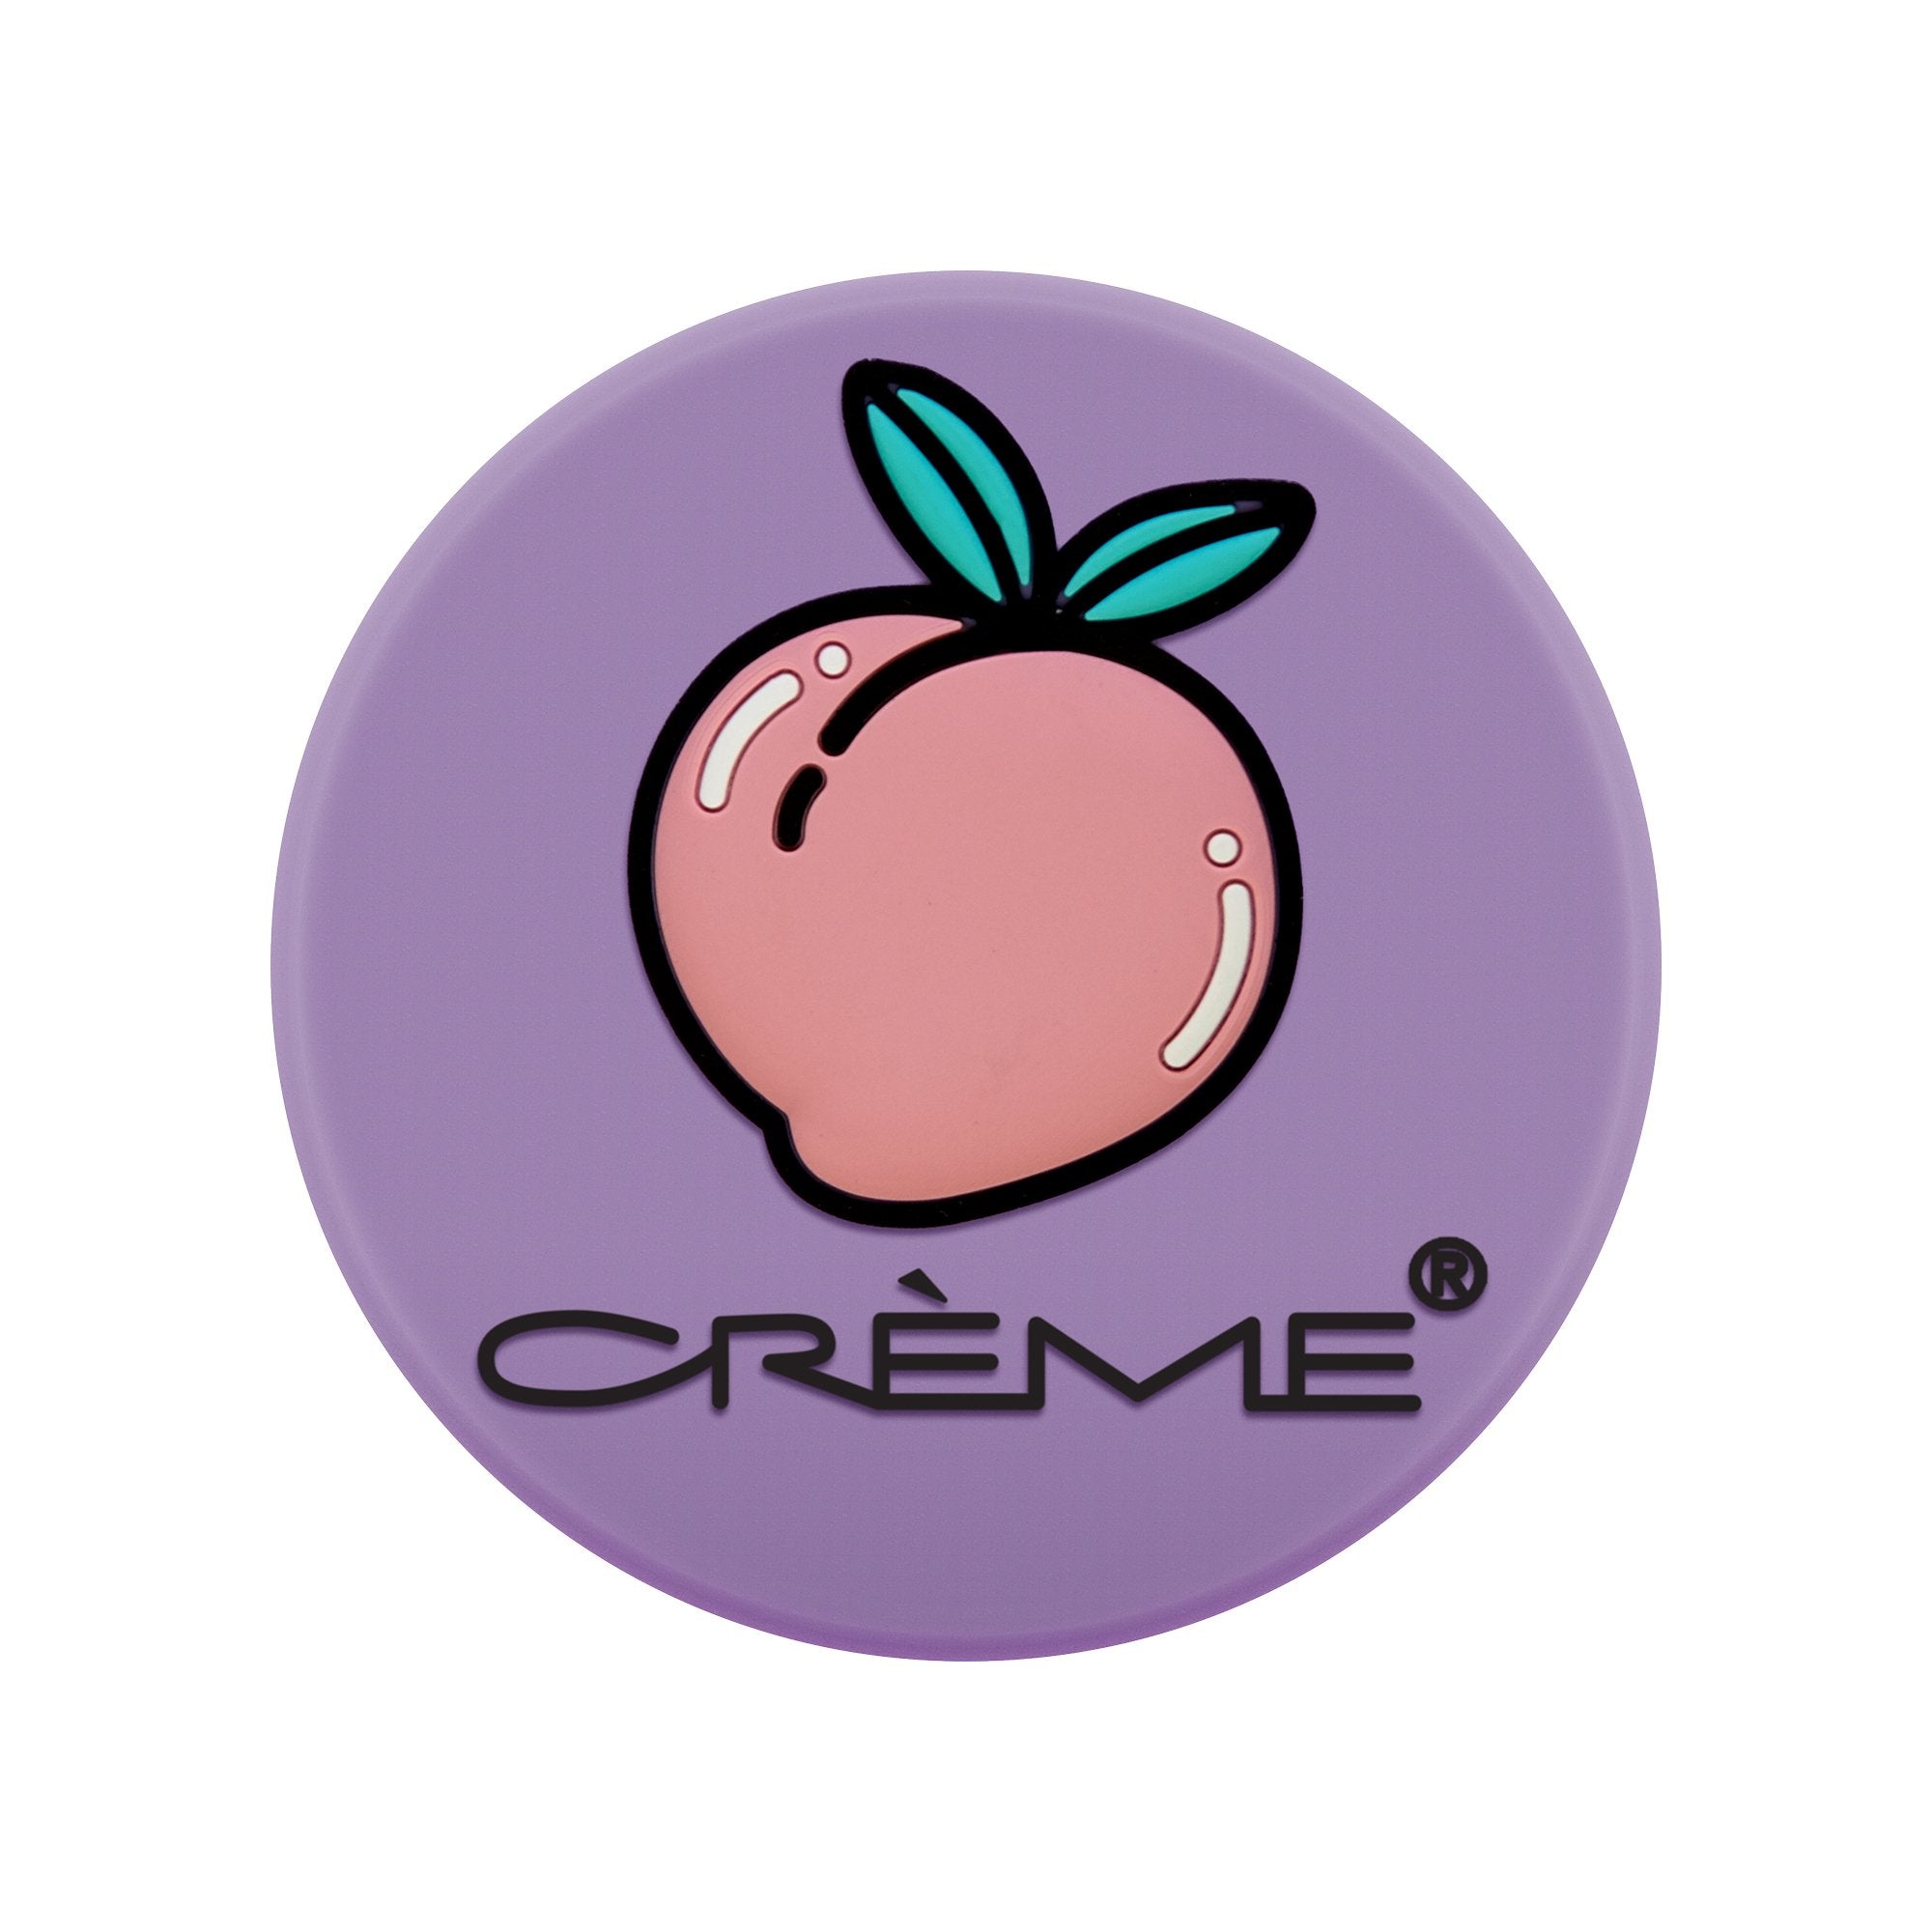 You're A Peach Compact Mirror - The Crème Shop